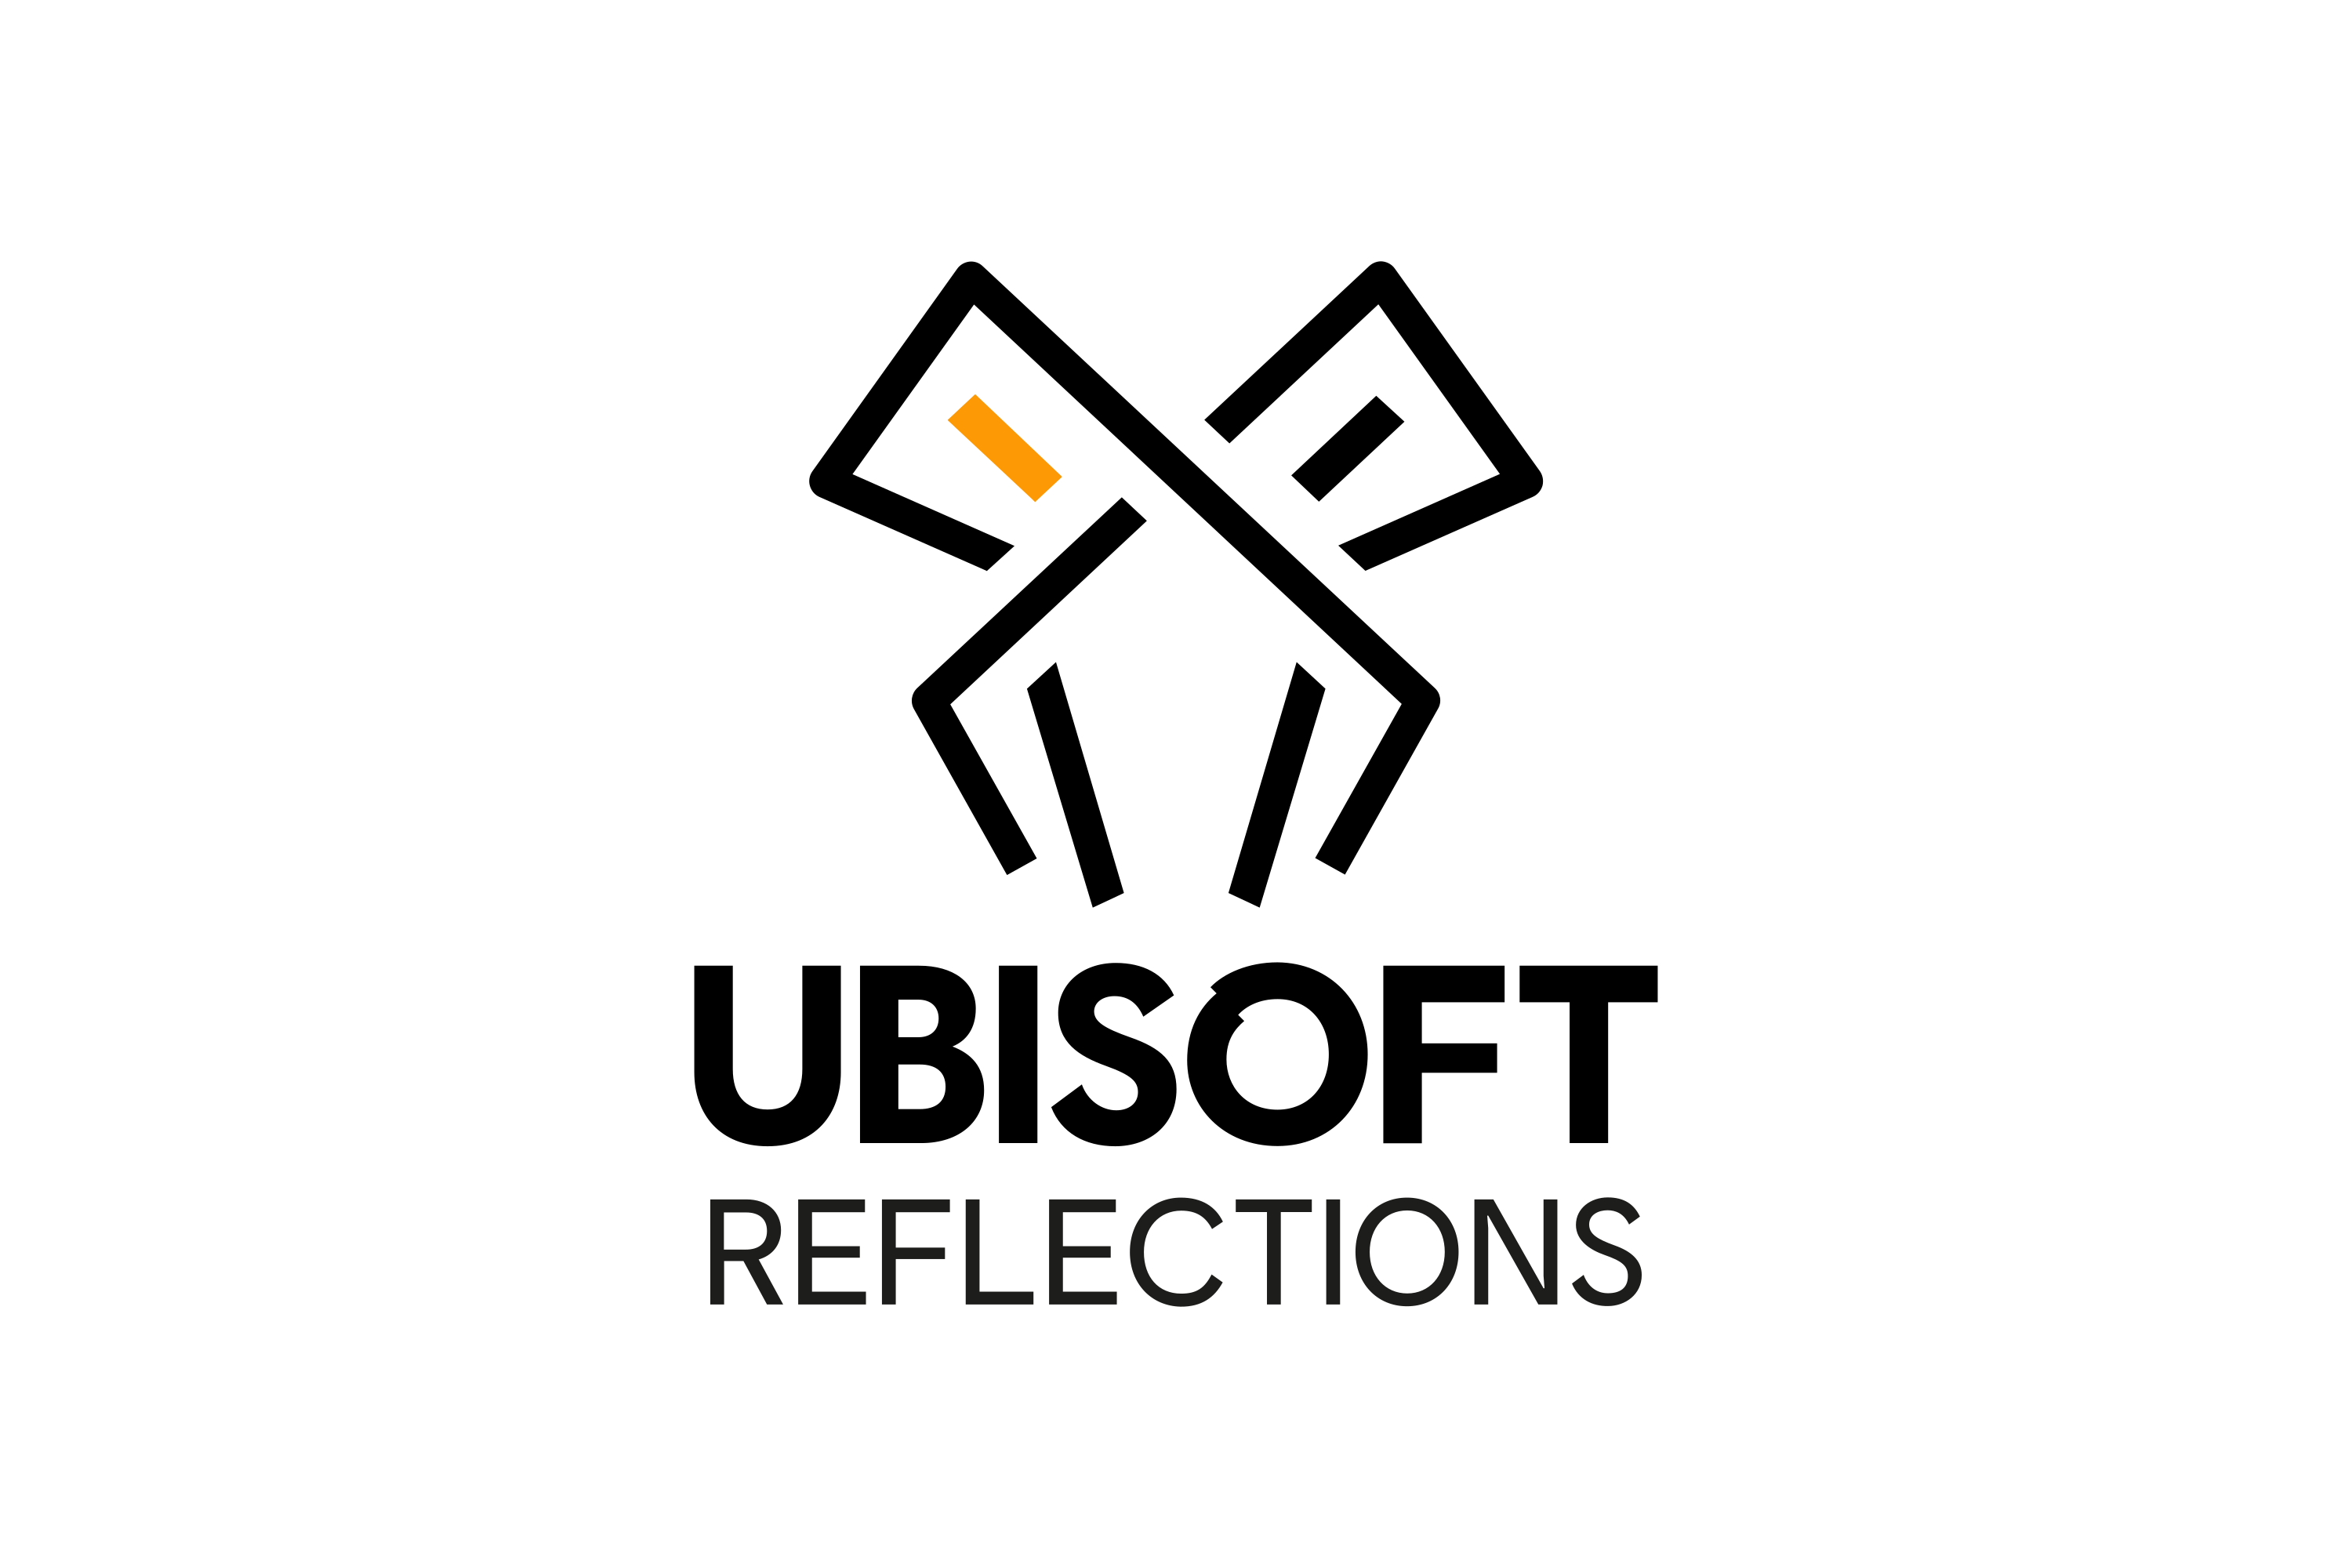 Ubisoft Reflections Logo